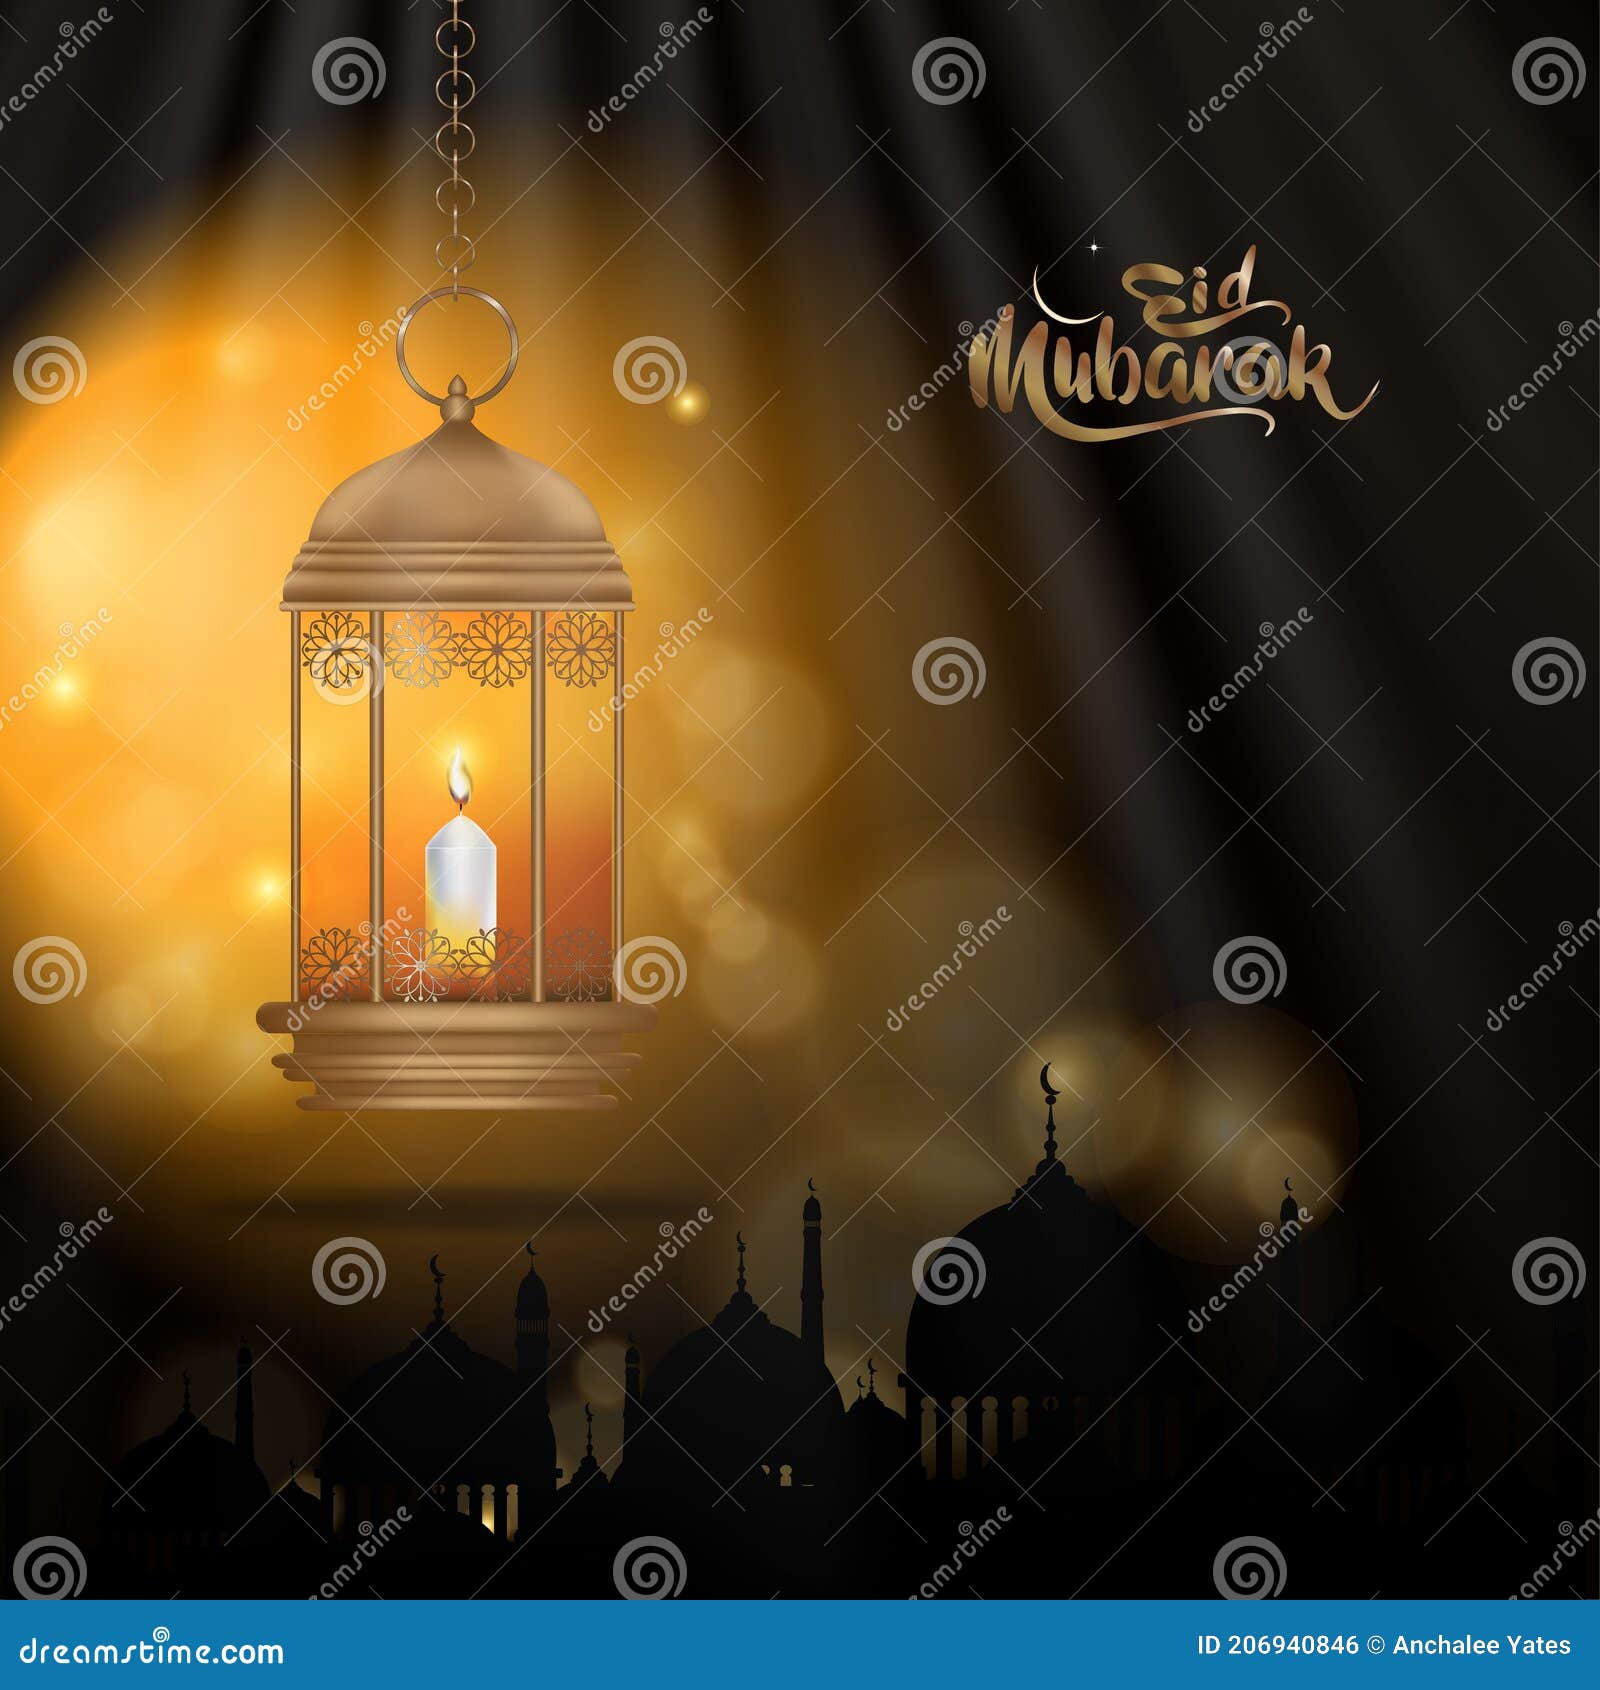 Eid Mubarak Islamic Calligraphy Design with Crescent Moon and  Mosque,Ramadan Kareem Banner or Invitations Card with 3d Lantern Stock  Vector - Illustration of desert, festival: 206940846